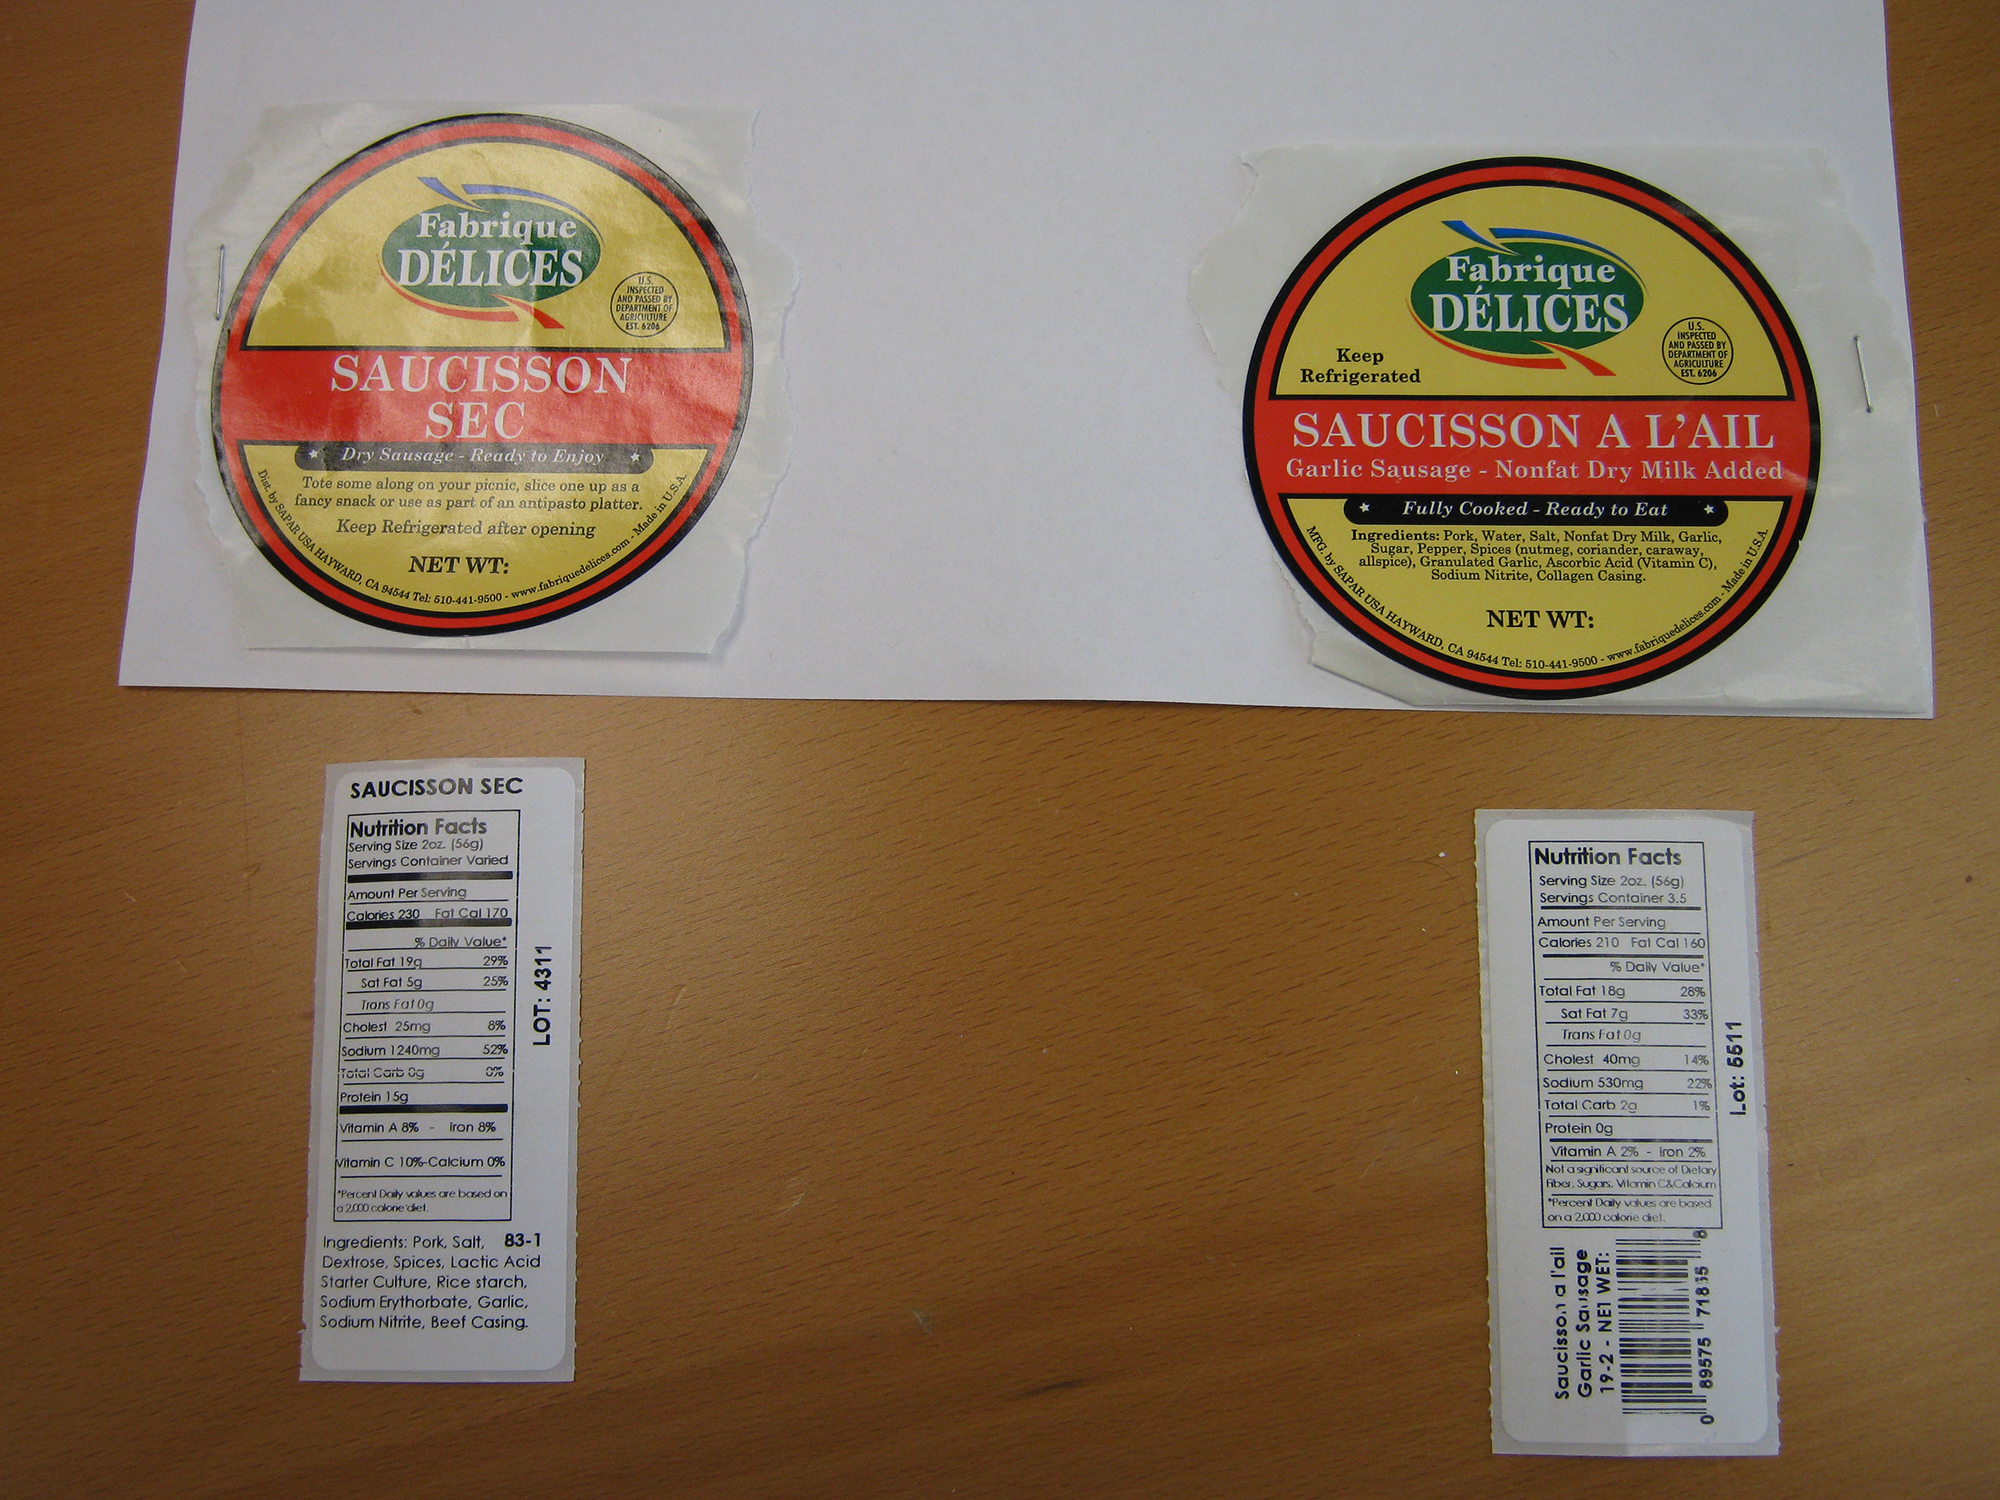 California Firm Recalls Sausage Products Due To Misbranding and Undeclared Allergen (Milk)